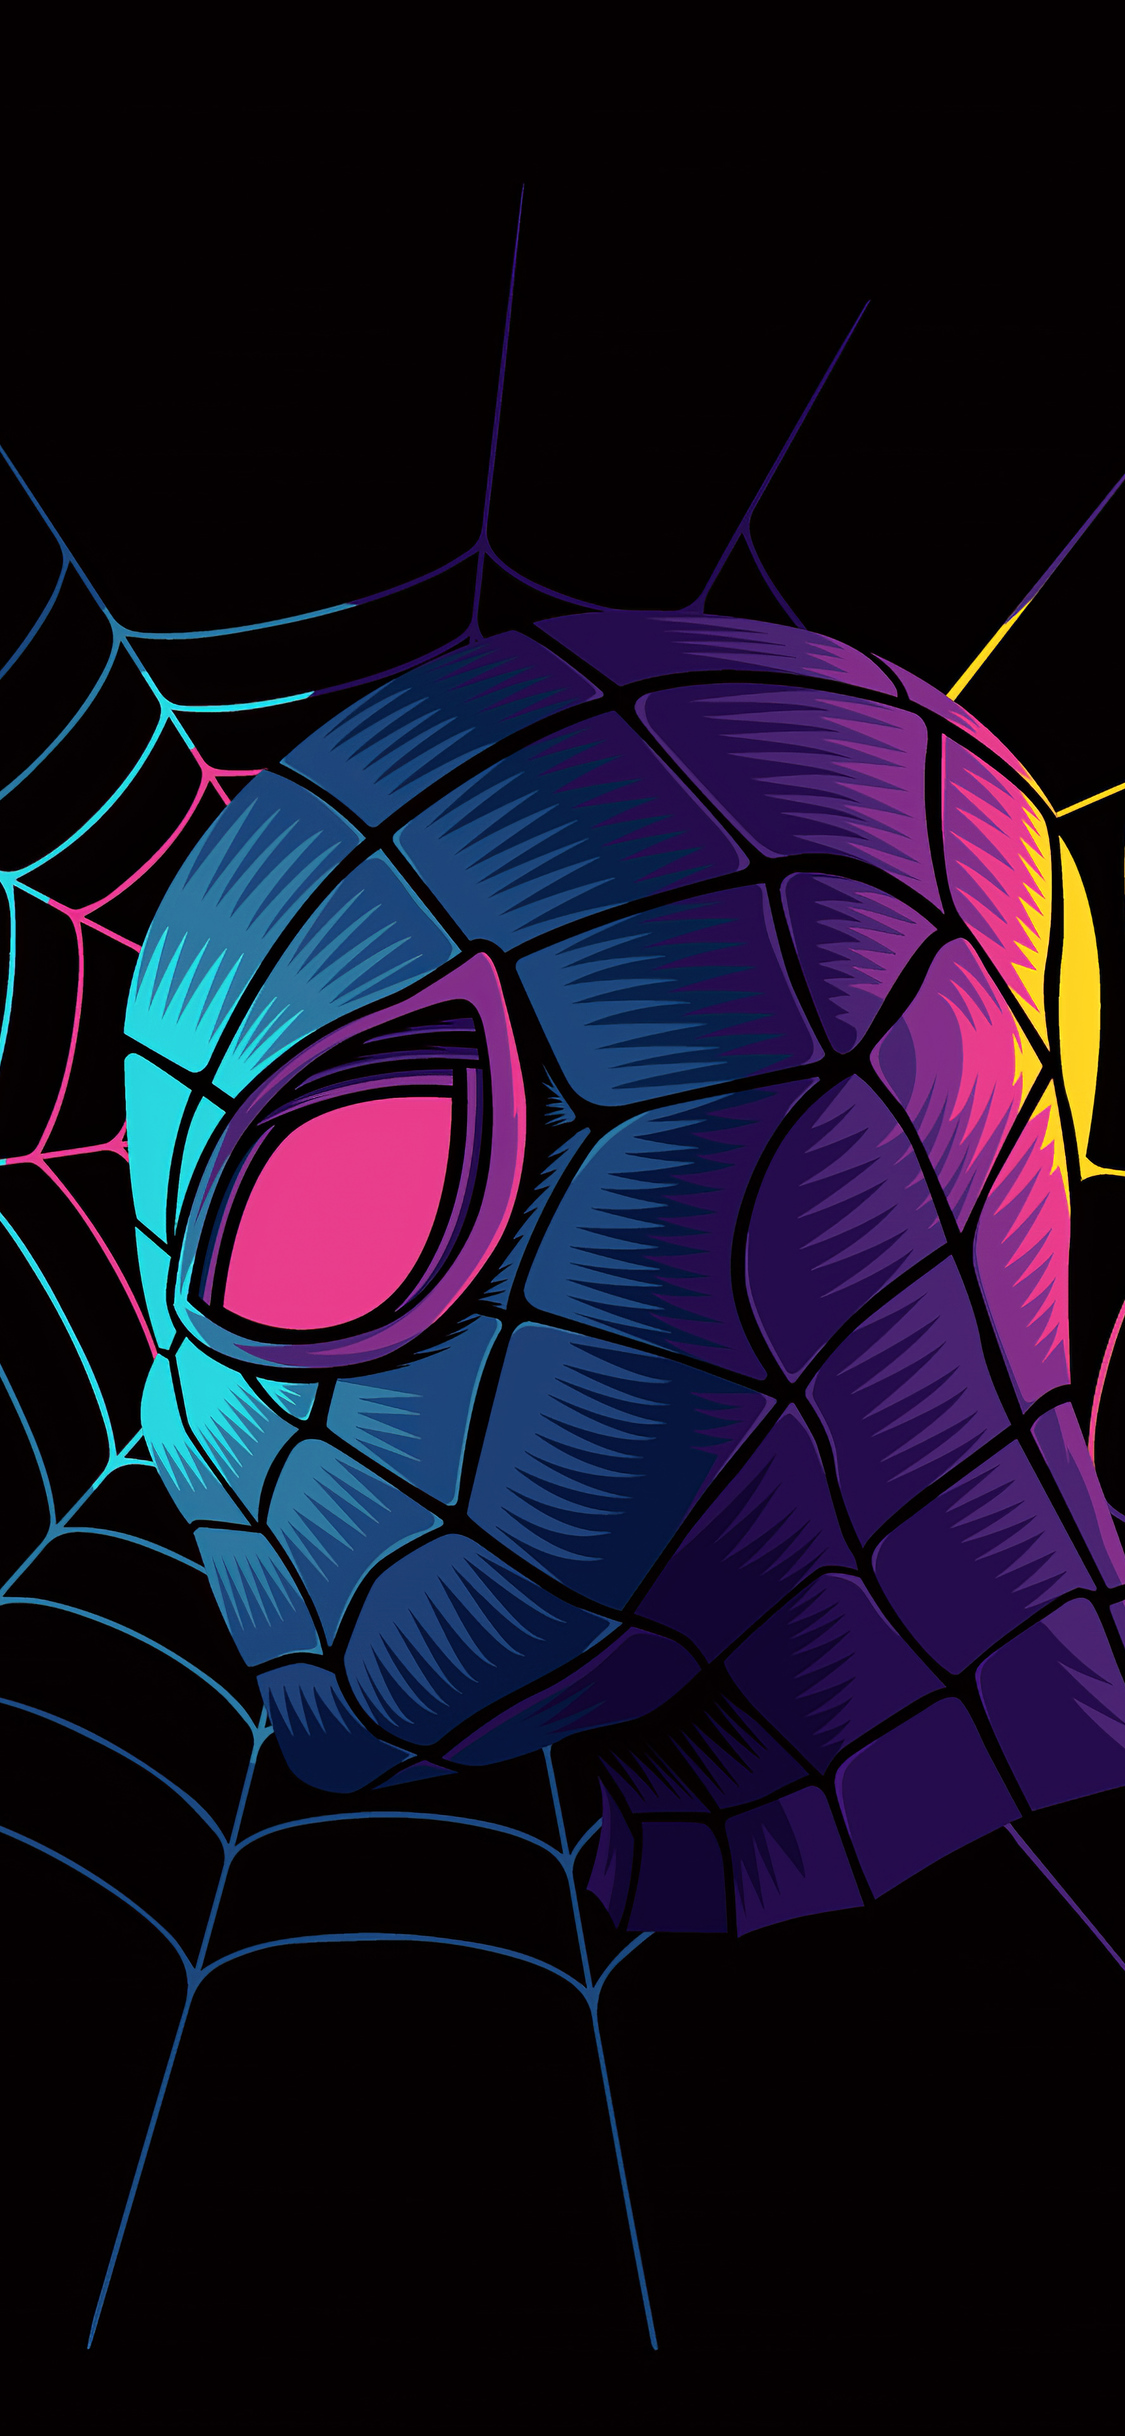 spiderman wallpaper,spider man,erfundener charakter,superheld,fiktion,dunkelheit